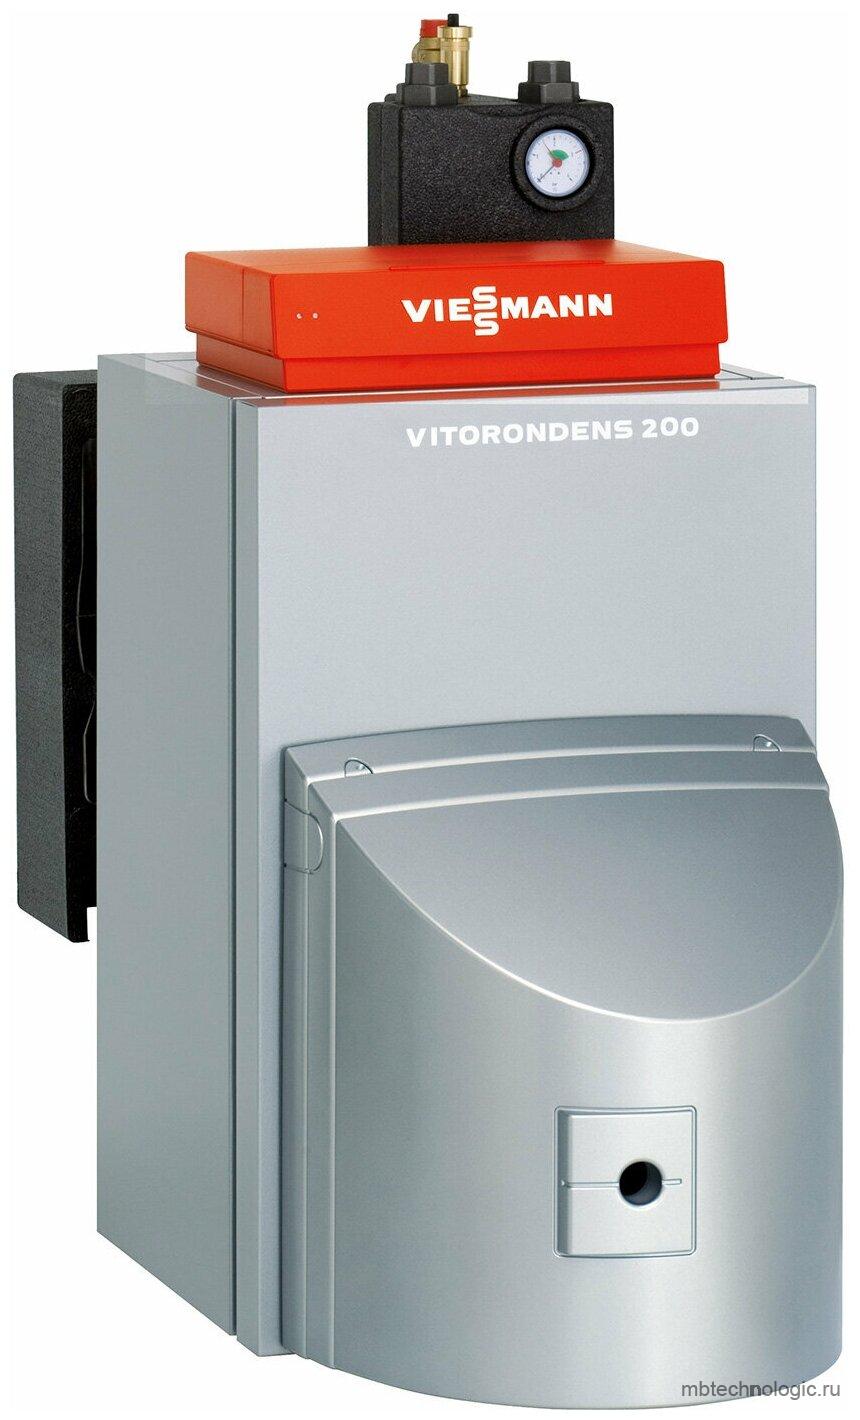 Viessmann Vitorondens 200-T BR2A213